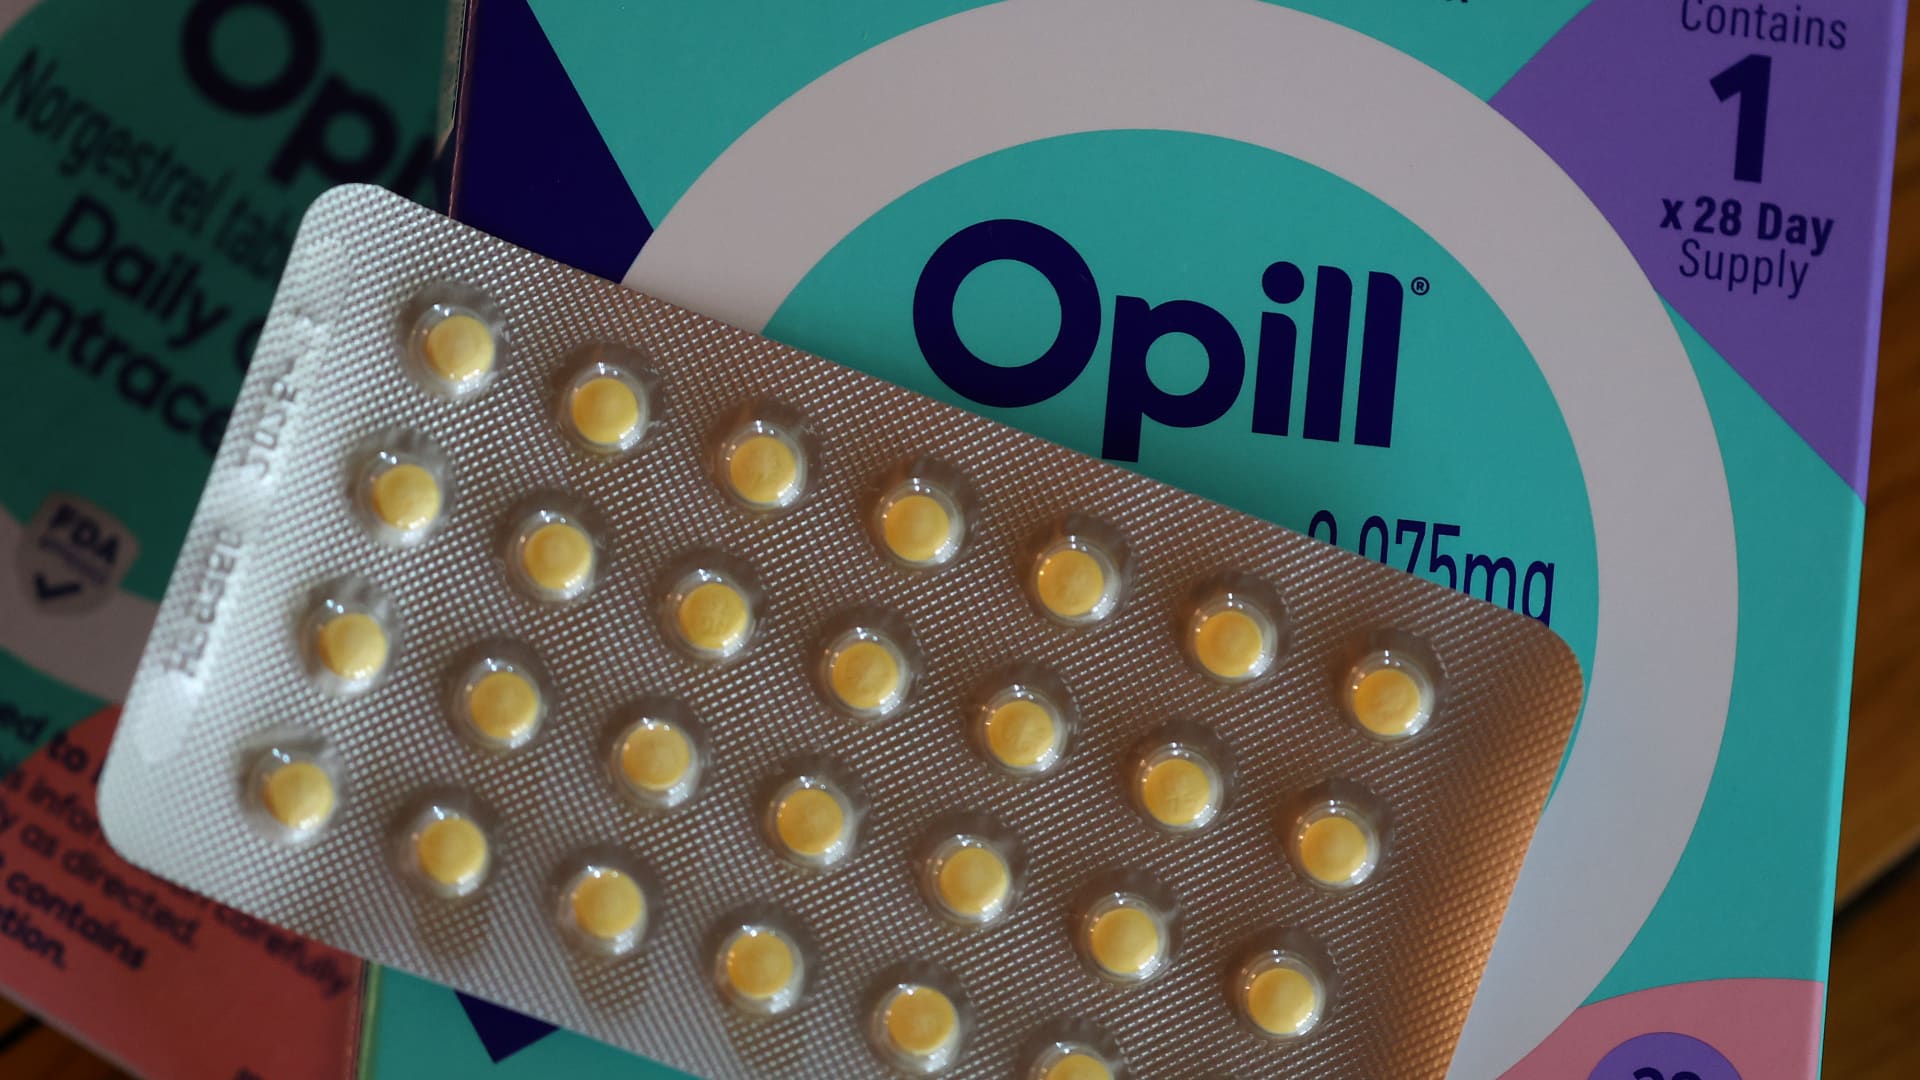 CVS drug plans will cover OTC birth control pill Opill